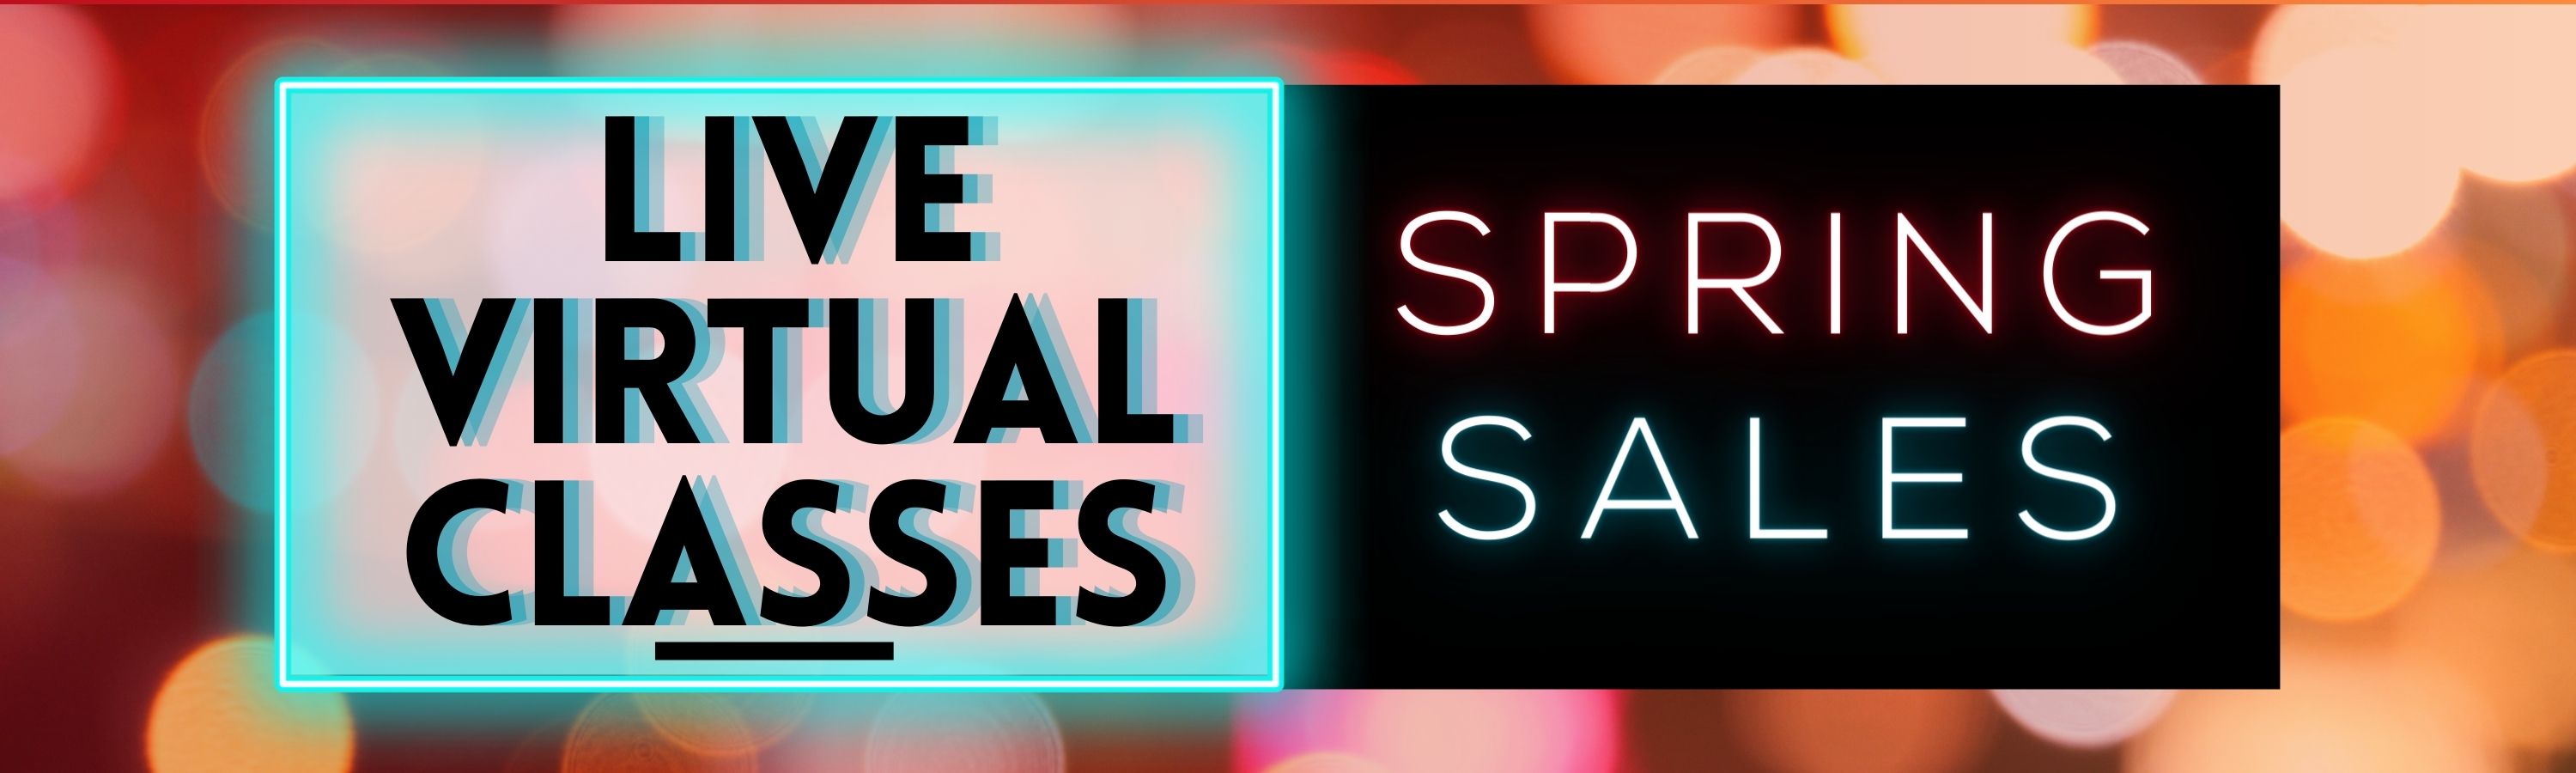 Live virtual classes - Spring sales